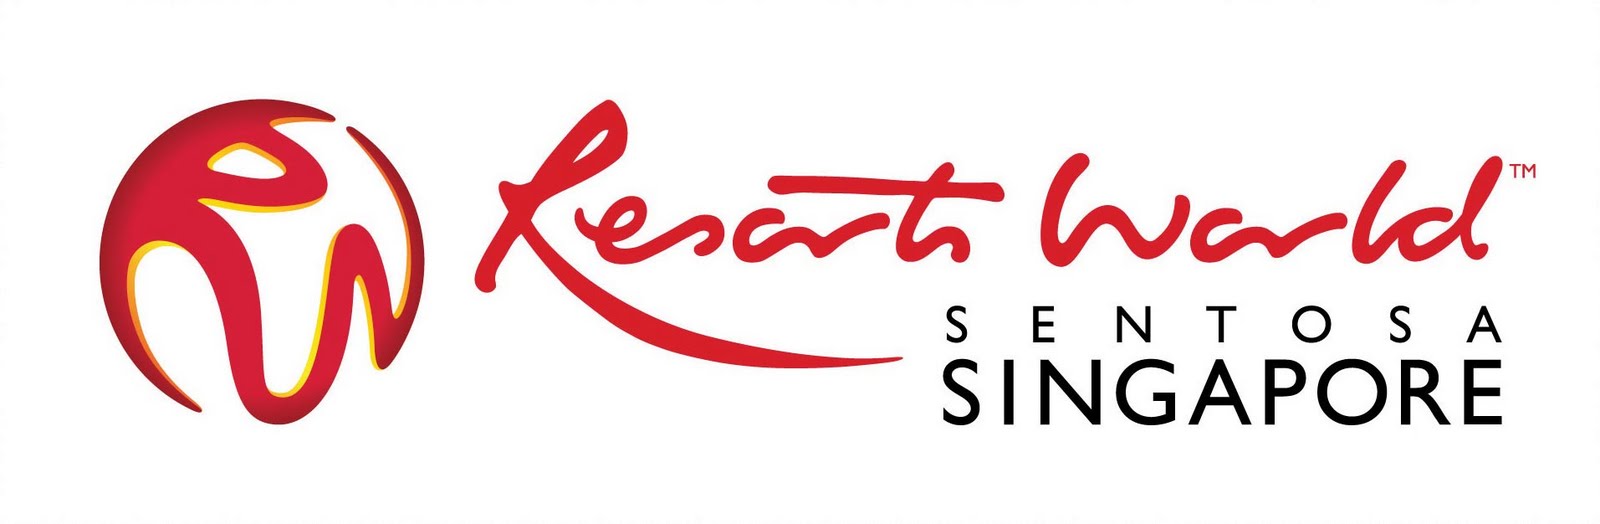 Resort World Sentosa Singapor